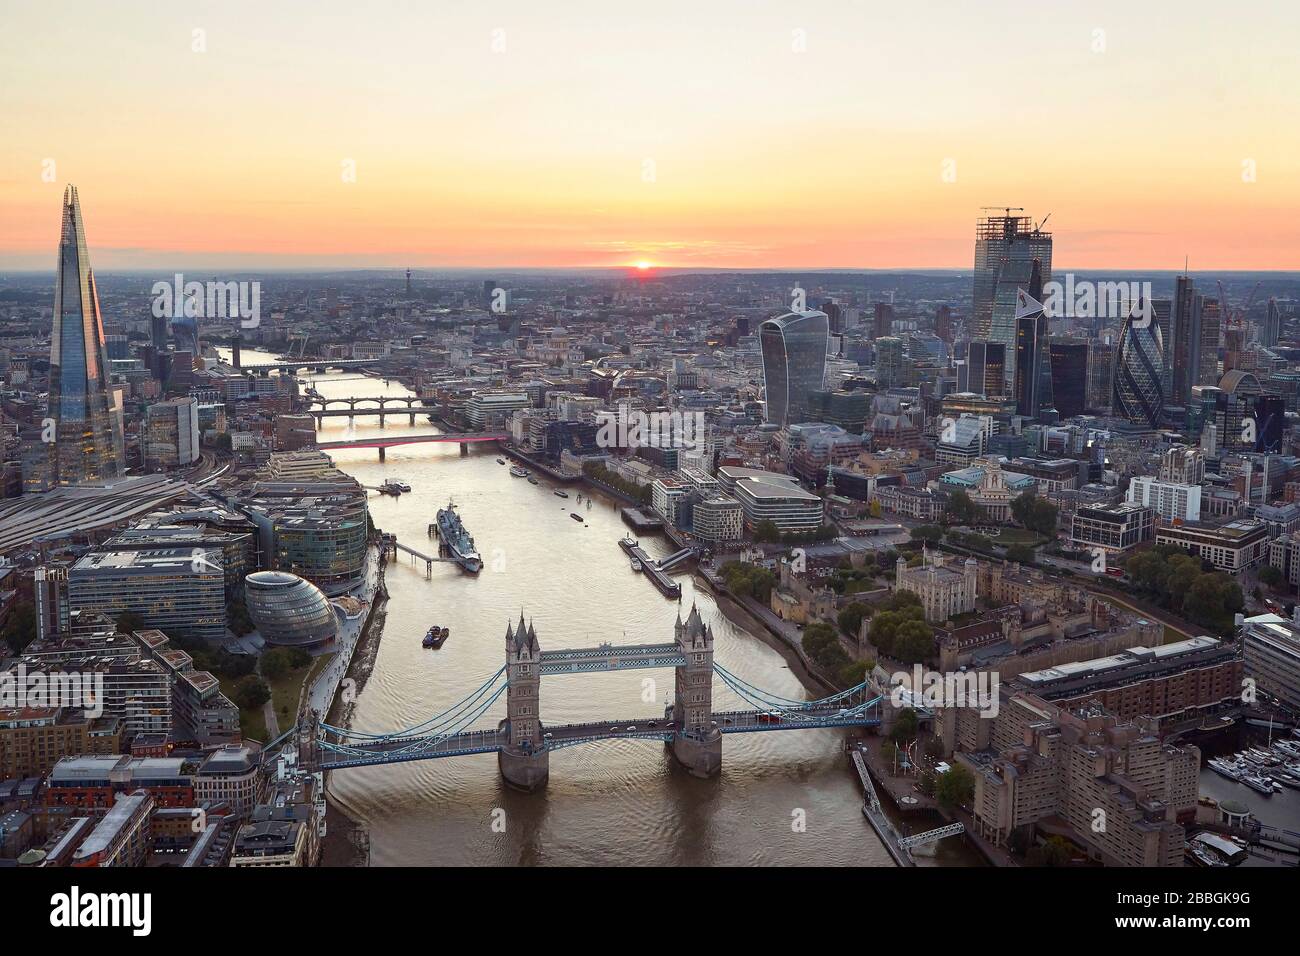 Sunset view from east with Tower Bridge. 52 Lime Street - The Scalpel, London, United Kingdom. Architect: Kohn Pedersen Fox Associates (KPF), 2018. Stock Photo